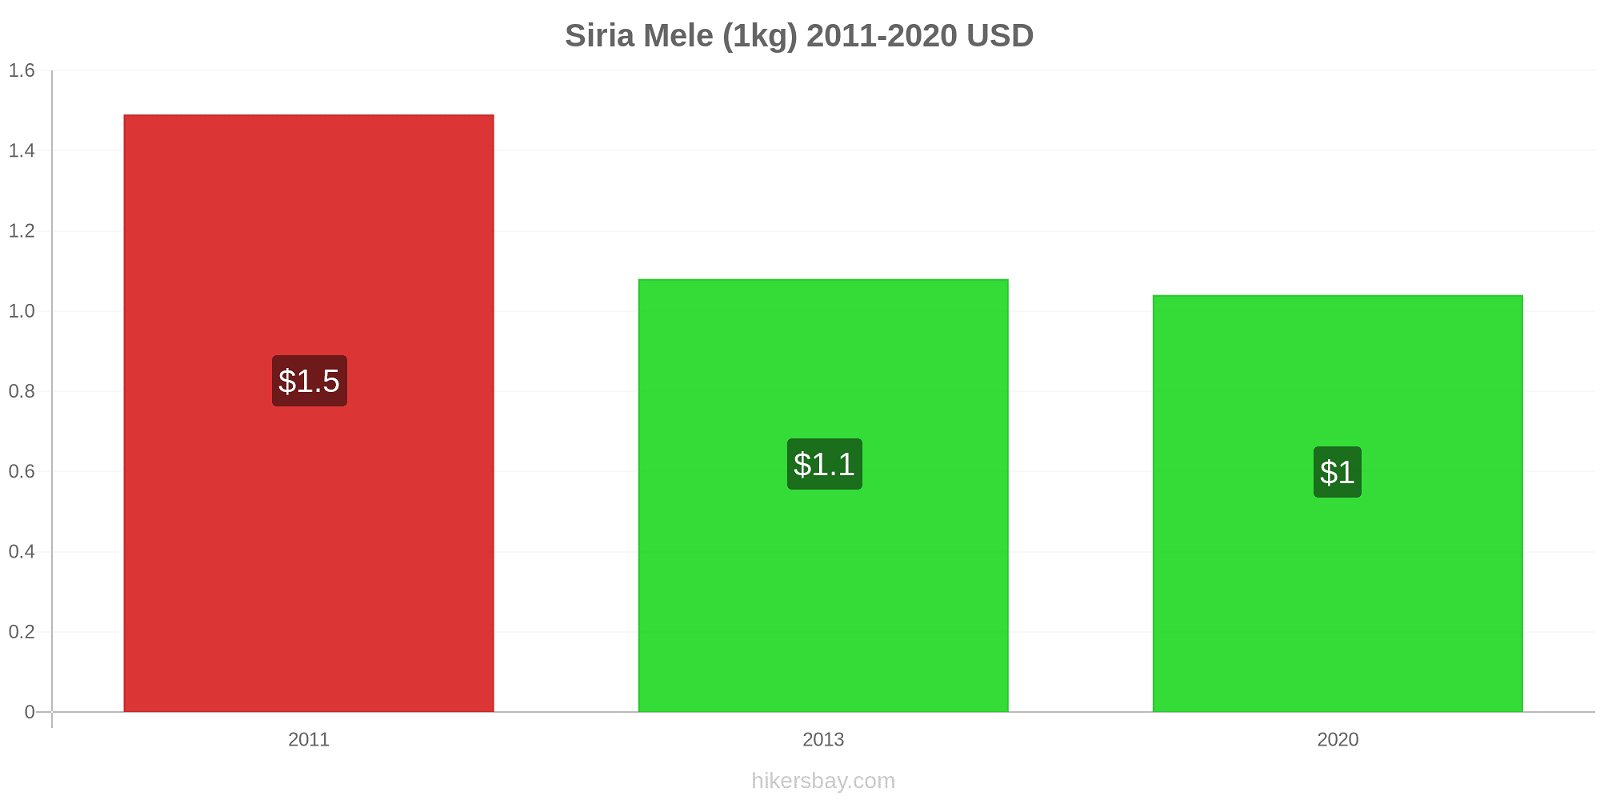 Siria variazioni di prezzo Mele (1kg) hikersbay.com